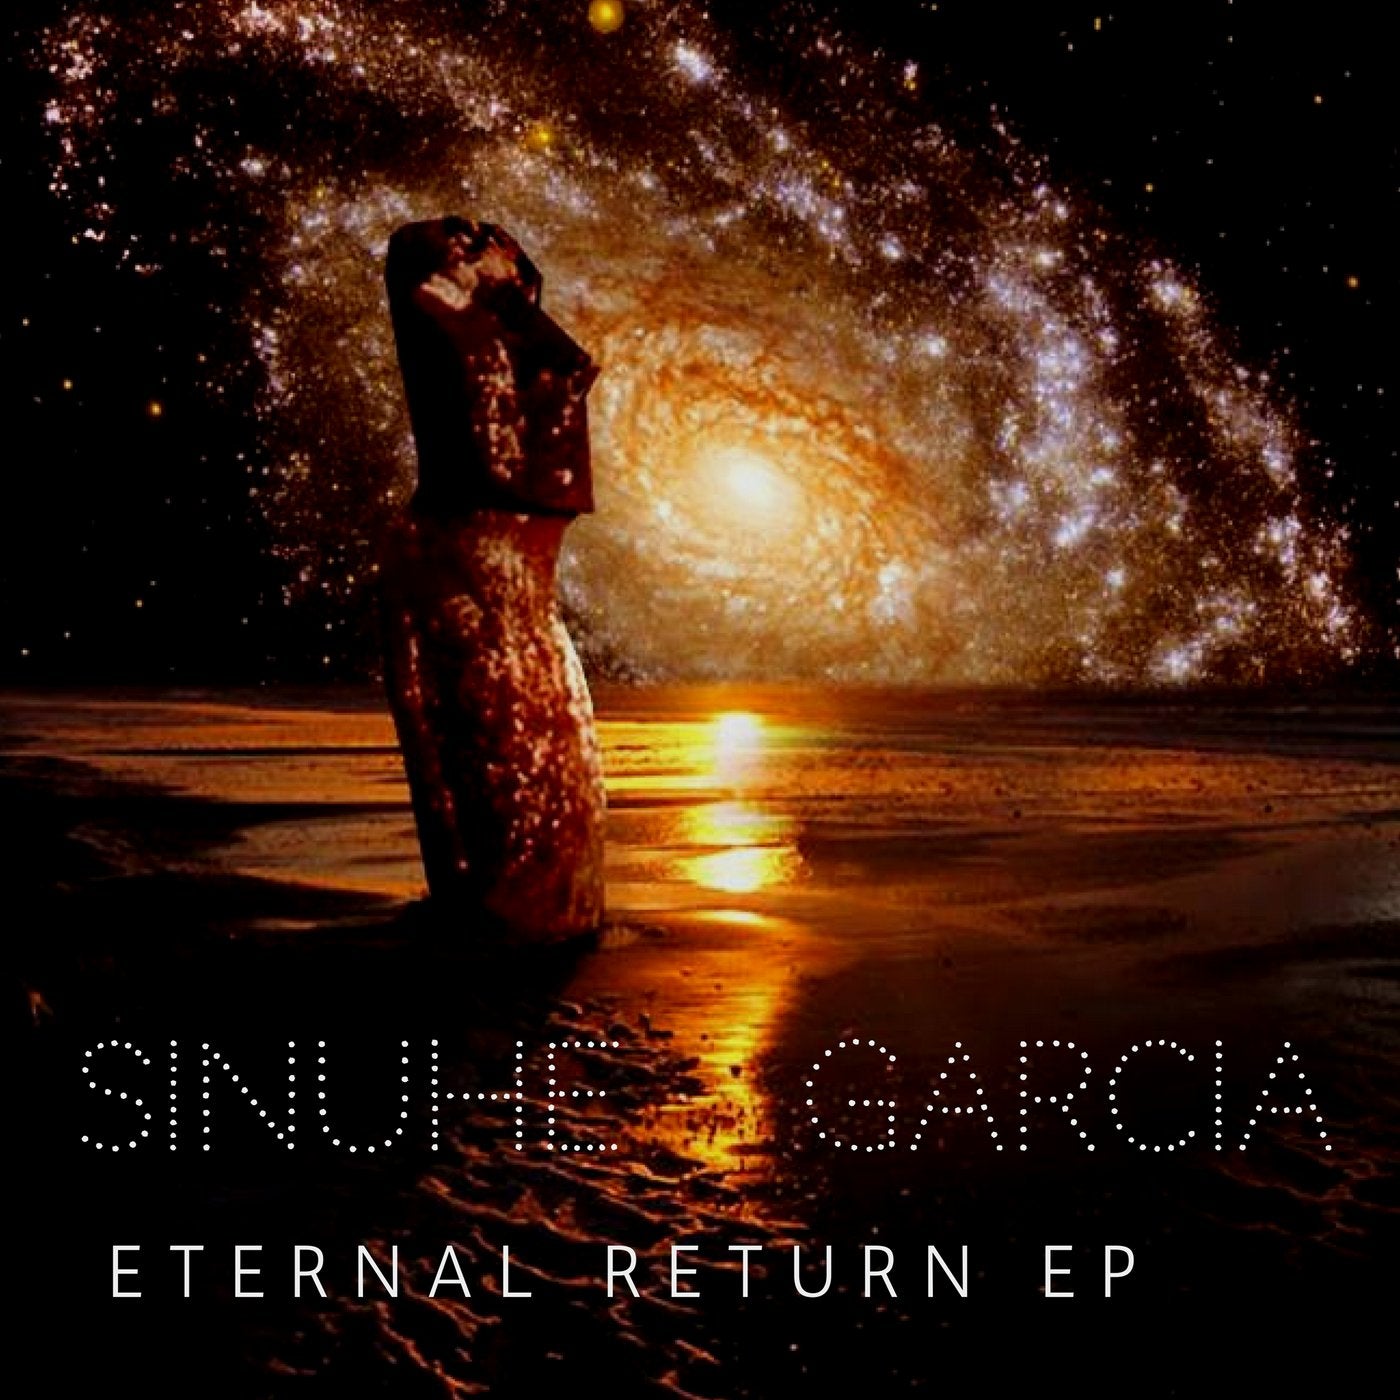 Eternal Return EP